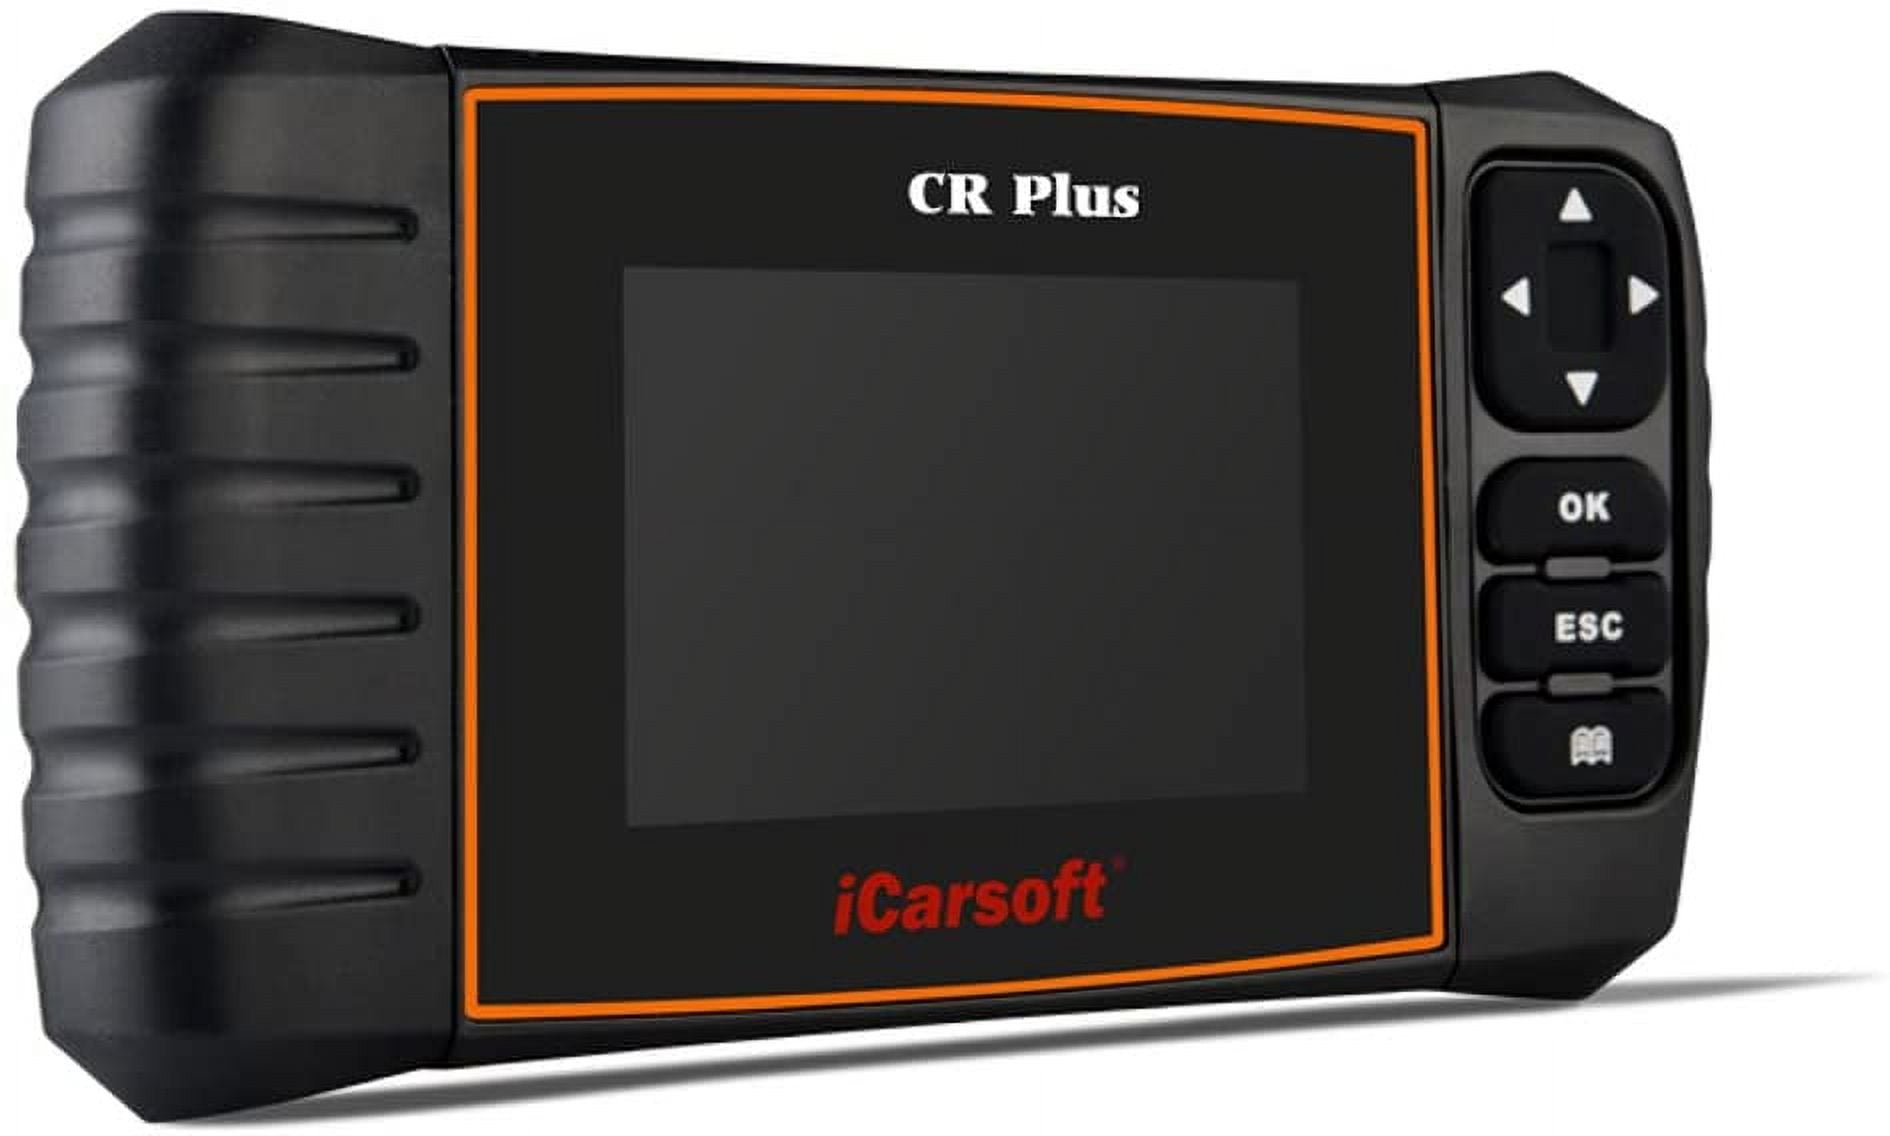 ICarsoft CR Pro Plus  Valise Diagnostic Automobile Multimarques